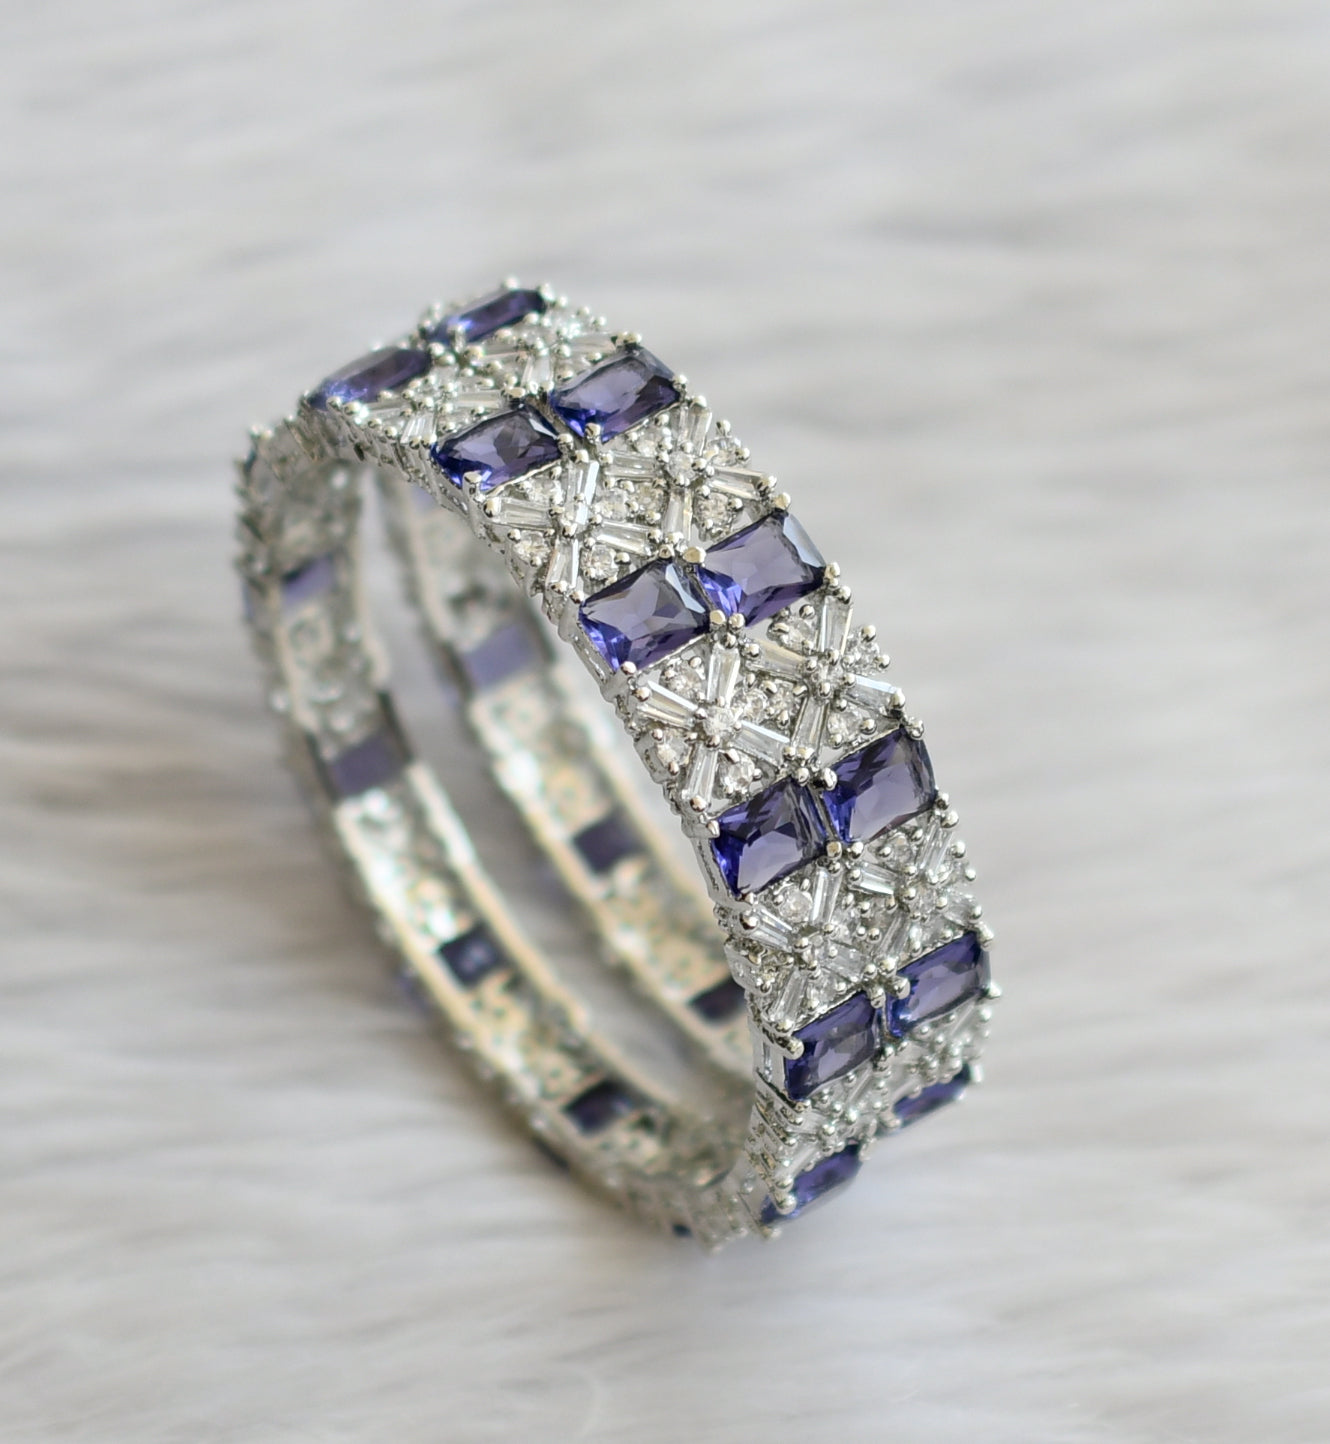 Silver tone cz purple-white block stone bangles(2.6) dj-46043